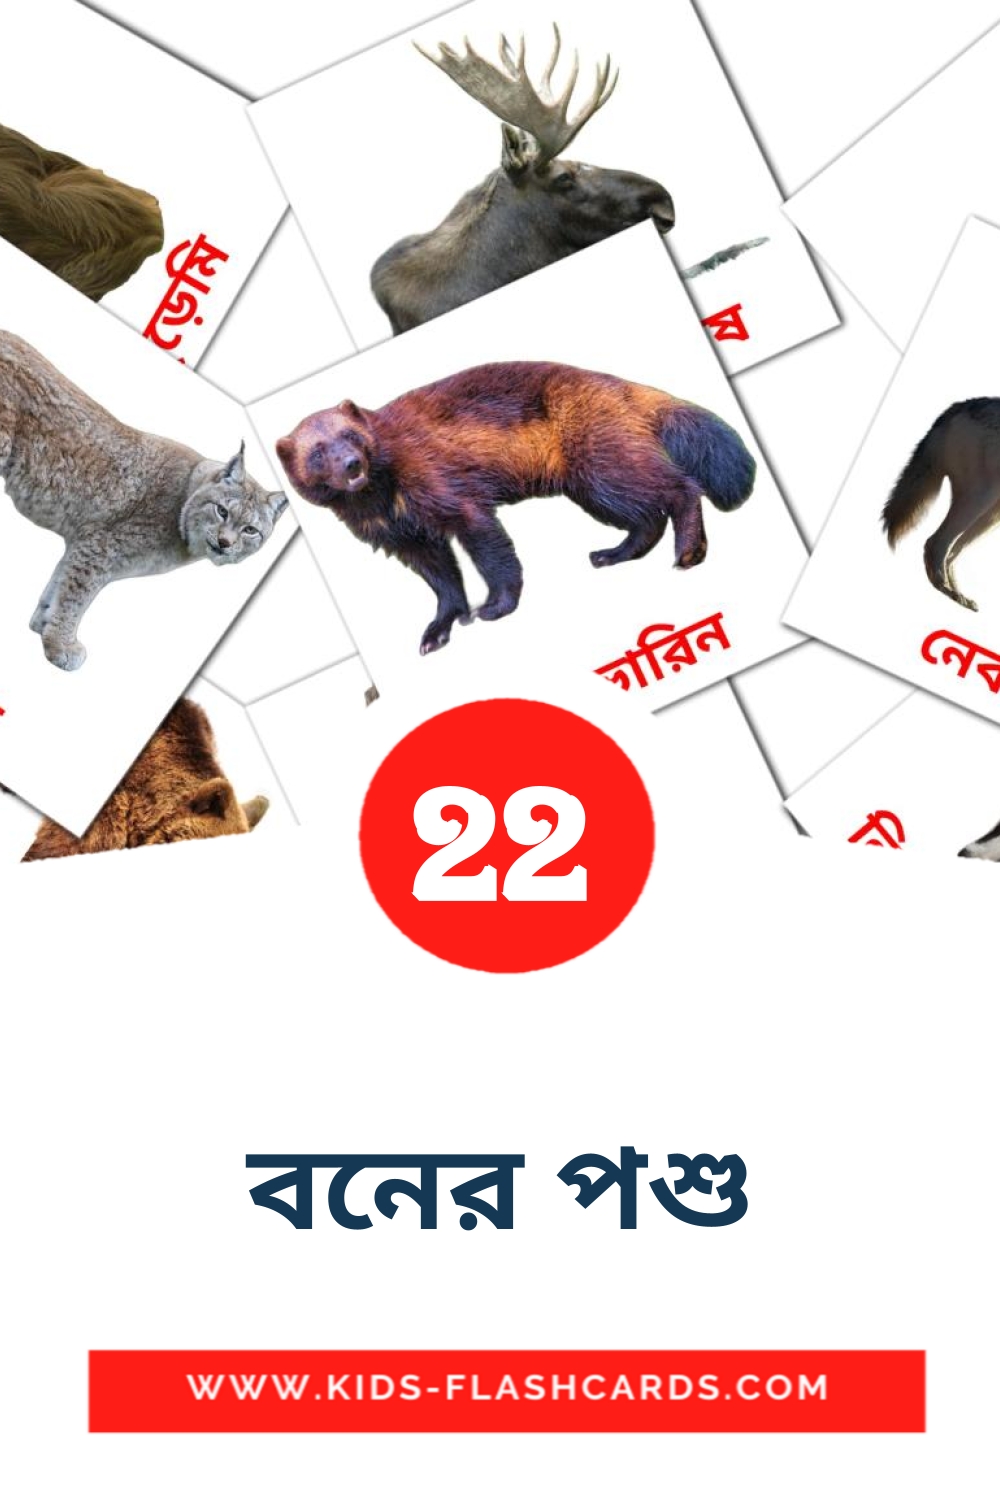 22 carte illustrate di বনের পশু per la scuola materna in bengalese